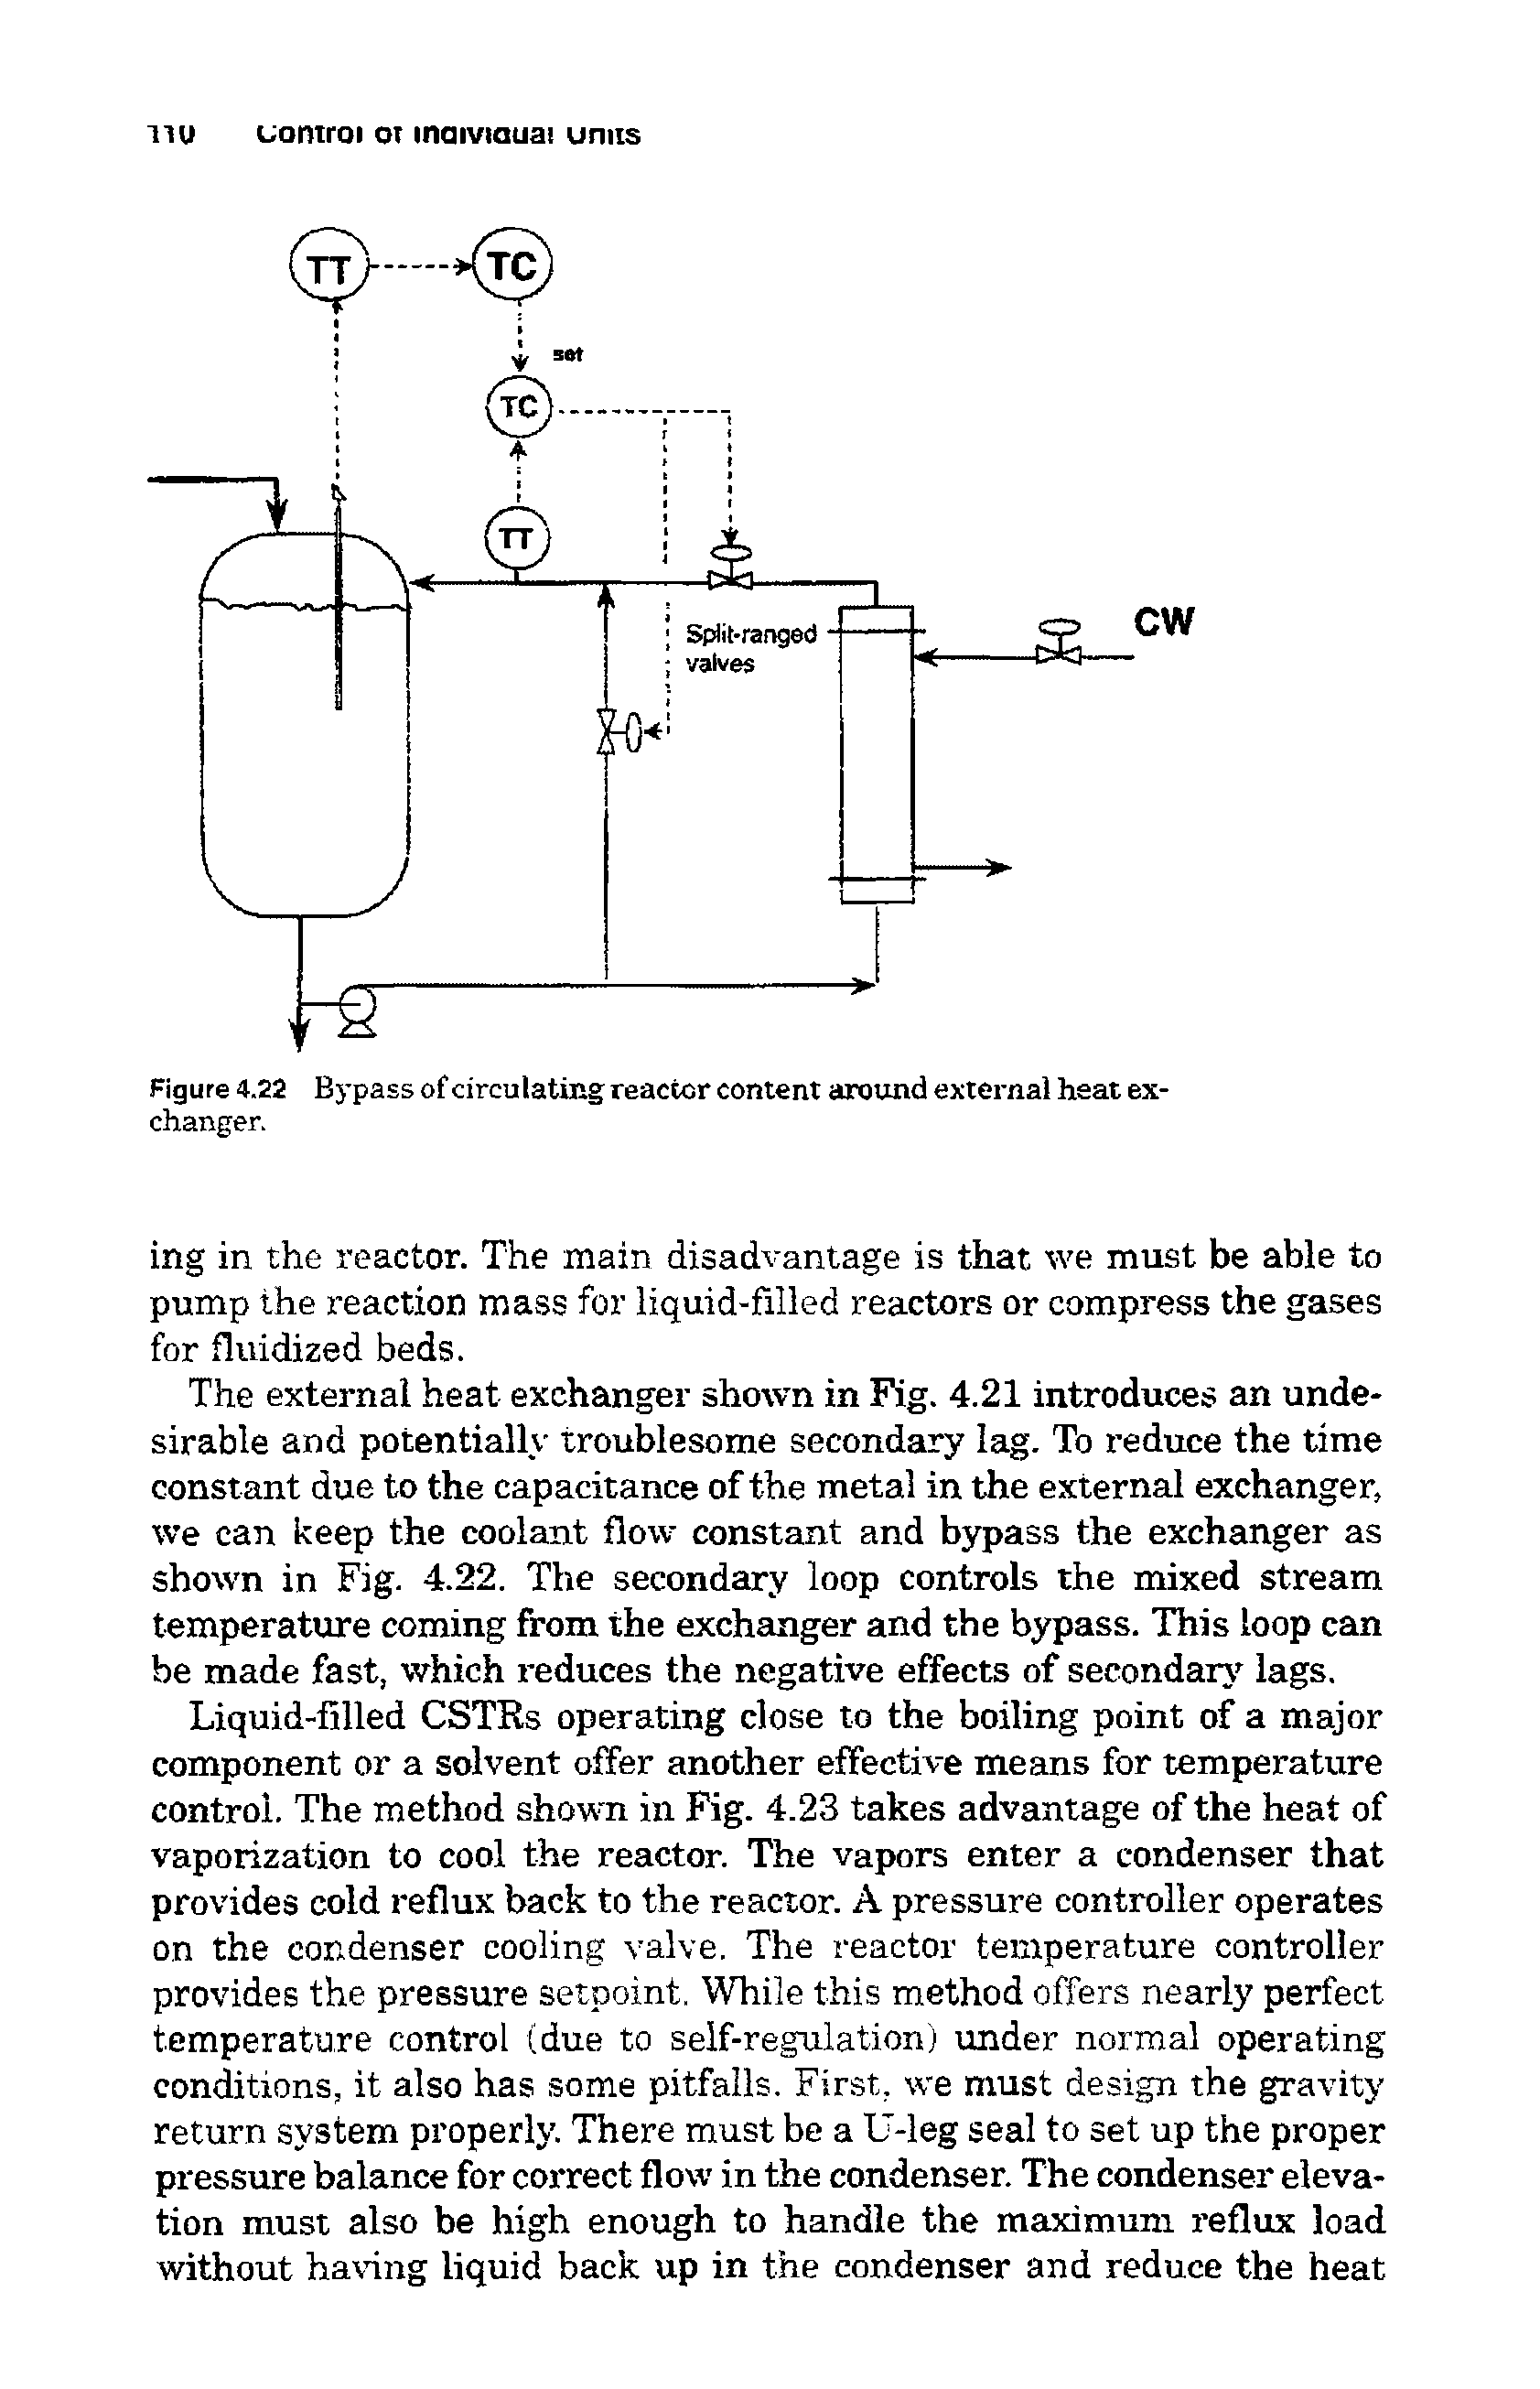 Figure 4.22 Bypass of circulating reactor content around external heat exchanger.